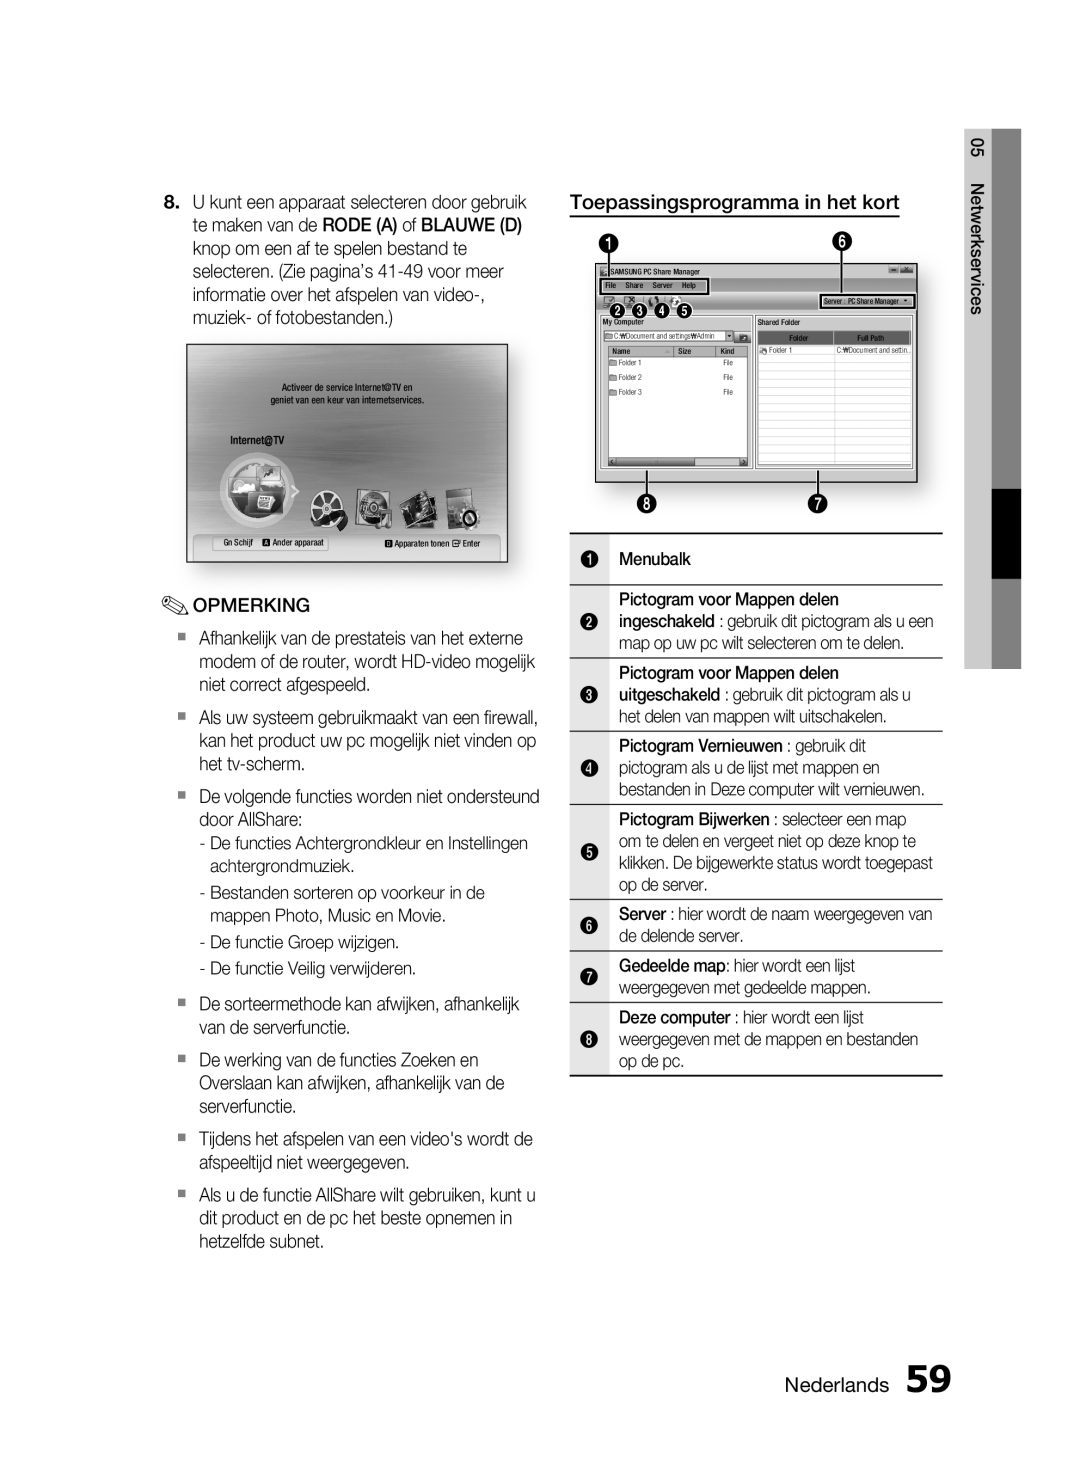 Samsung HT-C6200/XEF manual Toepassingsprogramma in het kort, Nederlands 